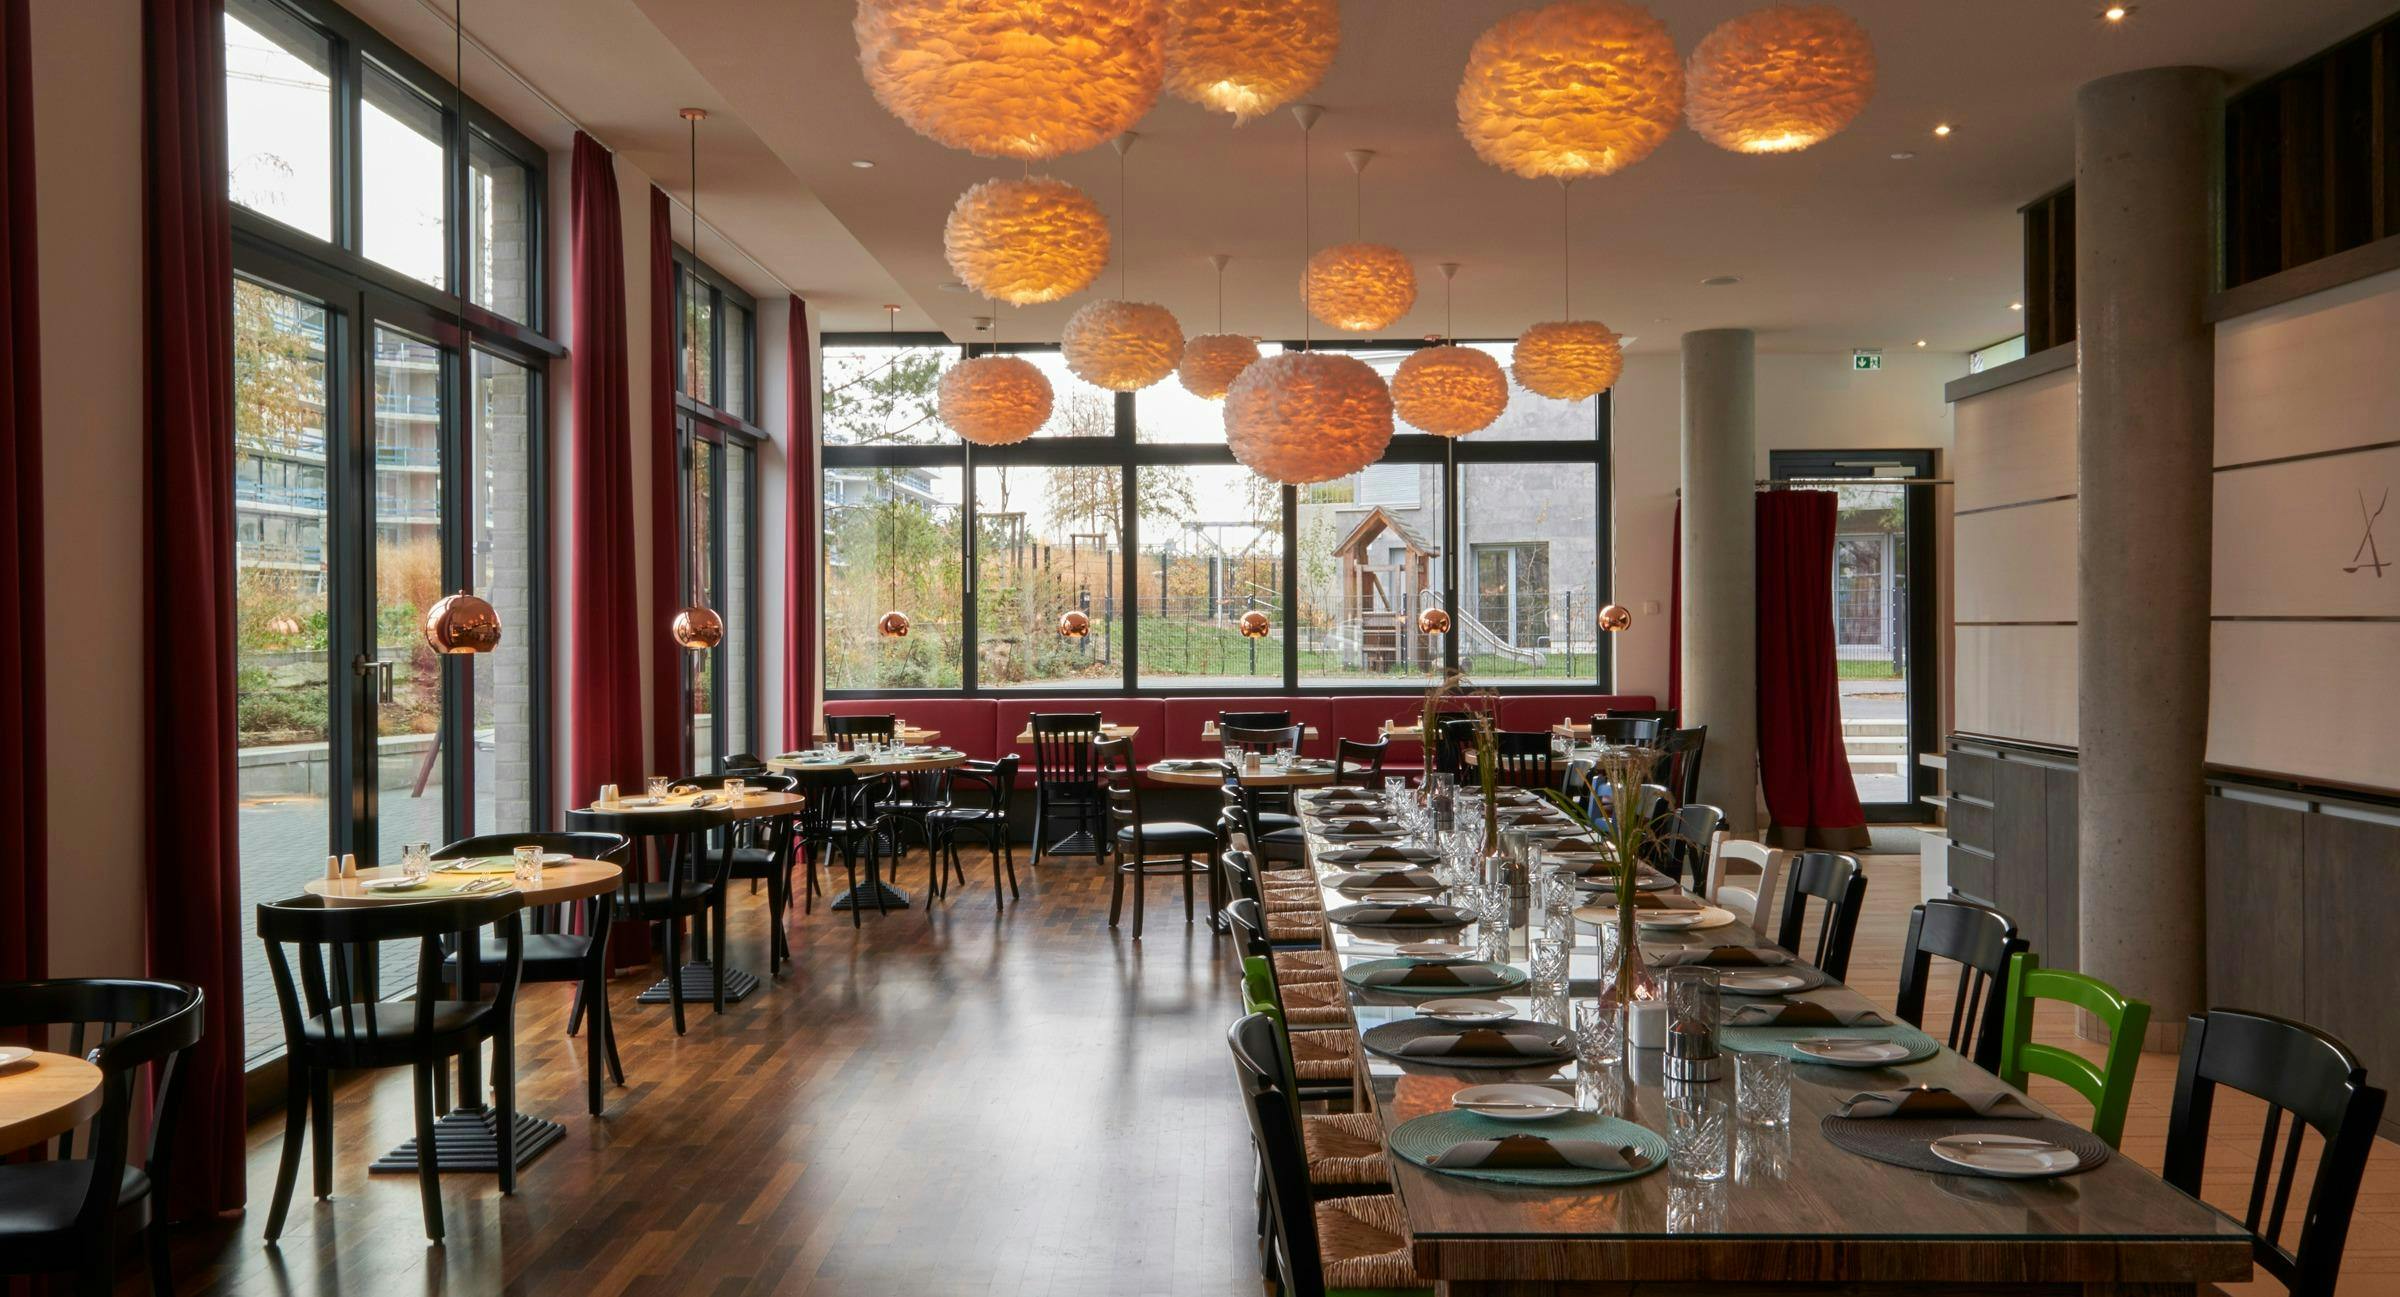 Photo of restaurant Tischlein Deck Dich in Tiergarten, Berlin